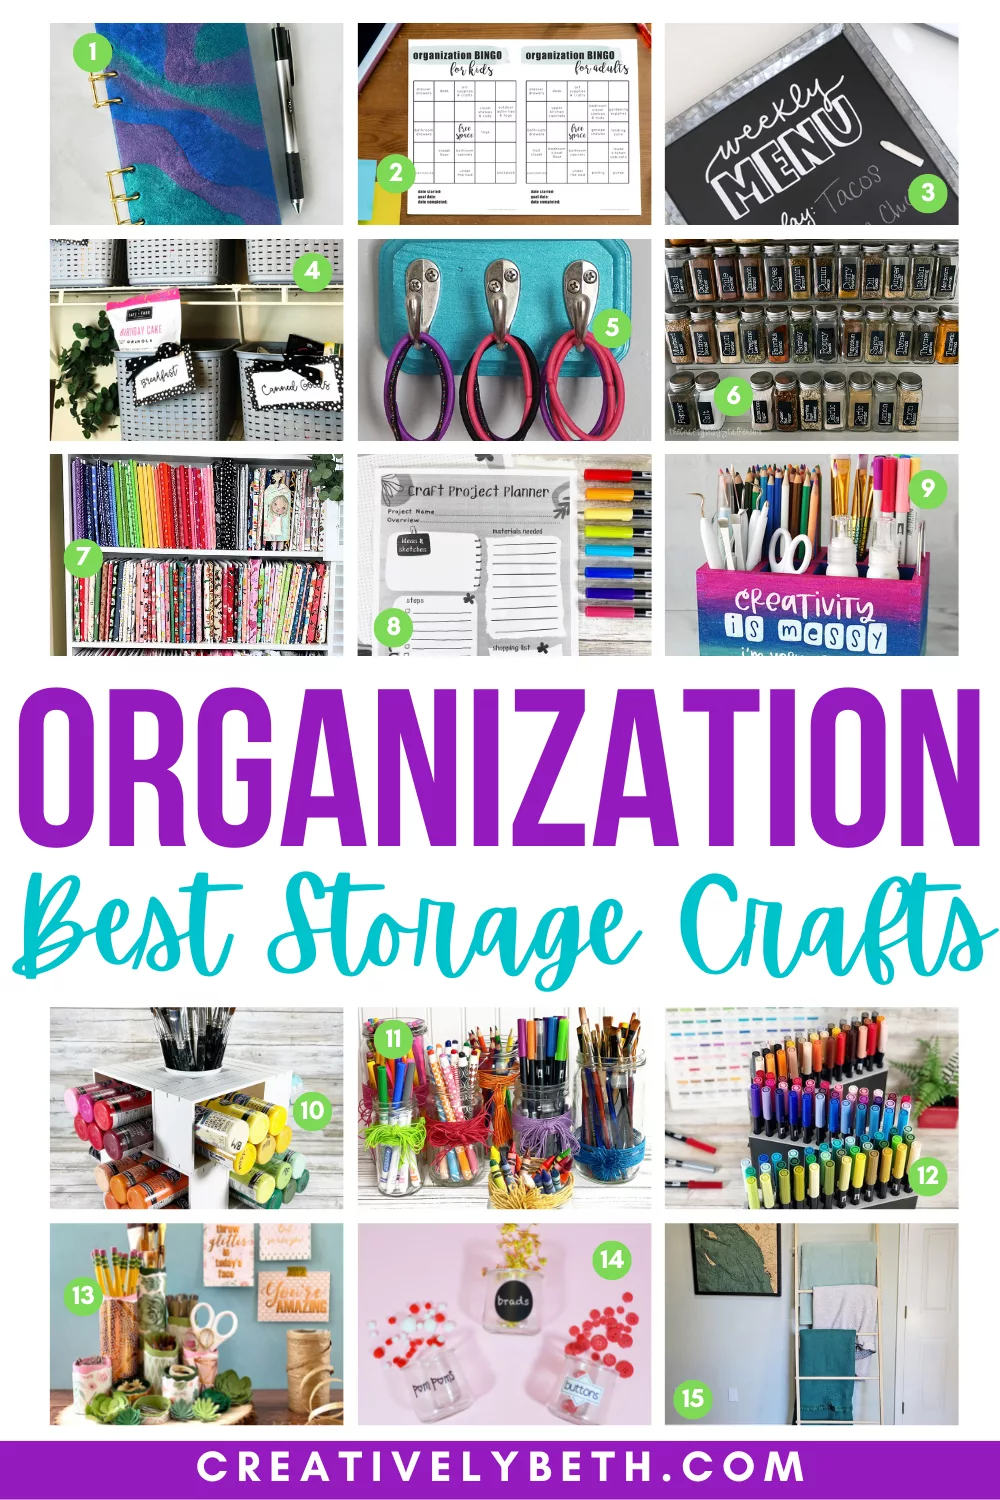 Craft Studio Organizing Ideas Creatively Beth #creativelybeth #craft #studio #organizing #organization #storage #diy #freeprintables #craftroom #svgfiles #organized